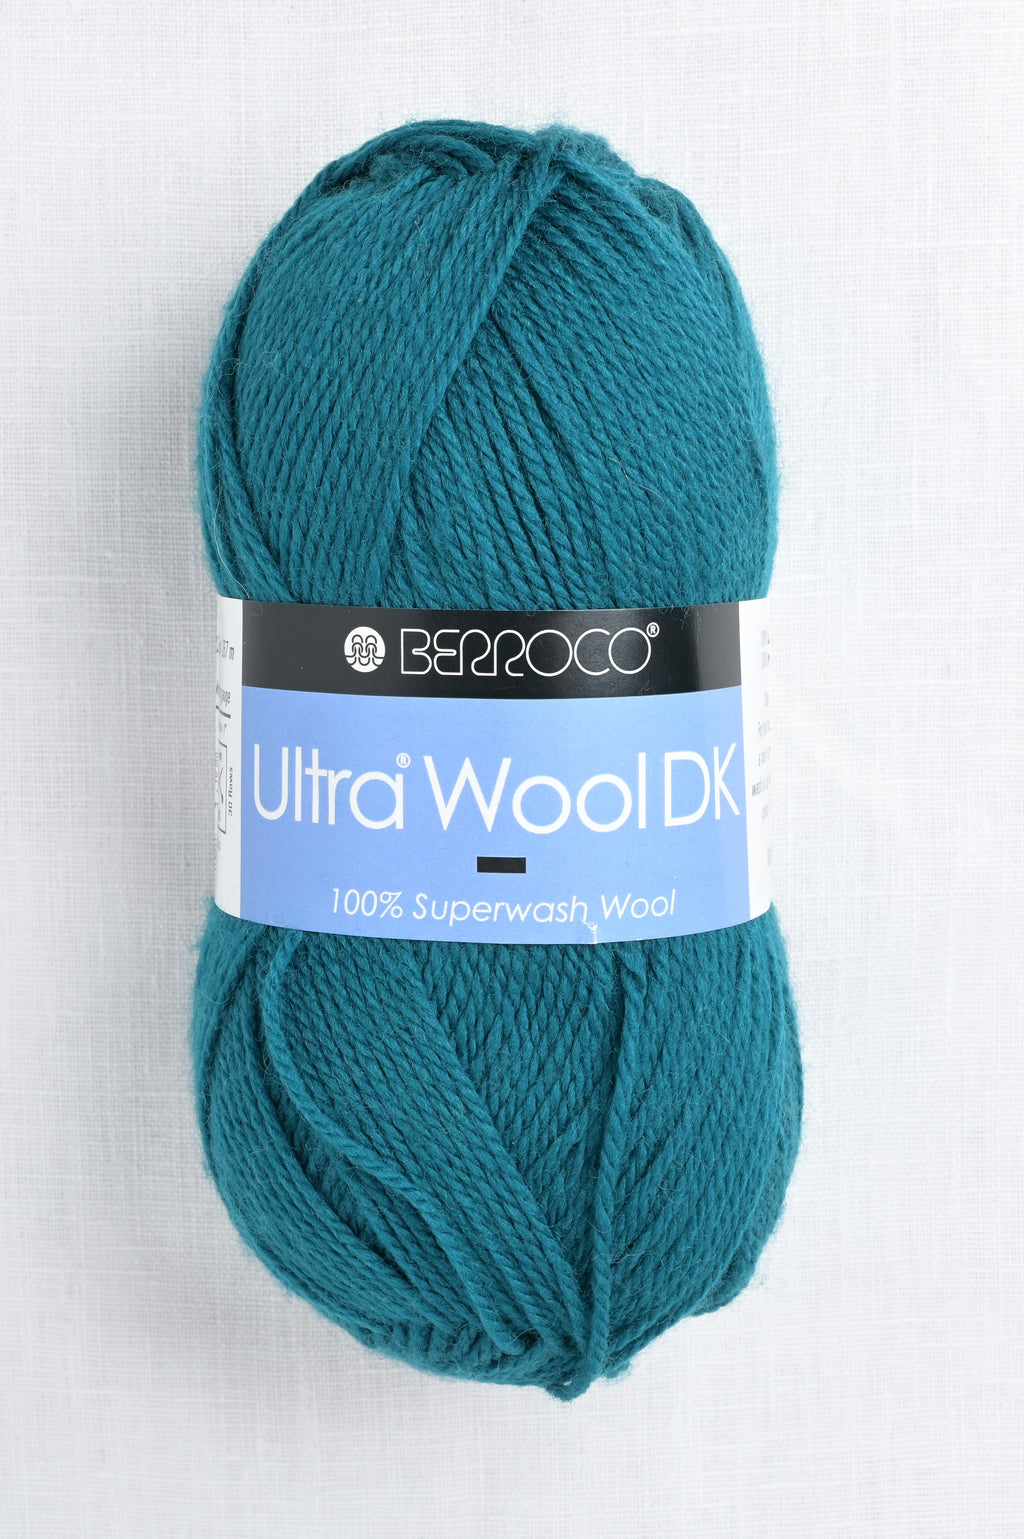 Berroco Ultra Wool DK 8361 Kale – Wool and Company